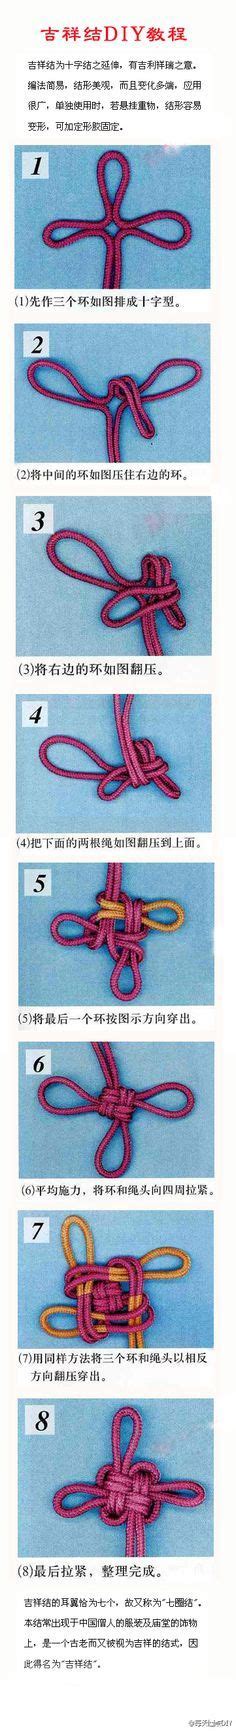 Chinese Knot Chinese Knot Knots Knot Cushion